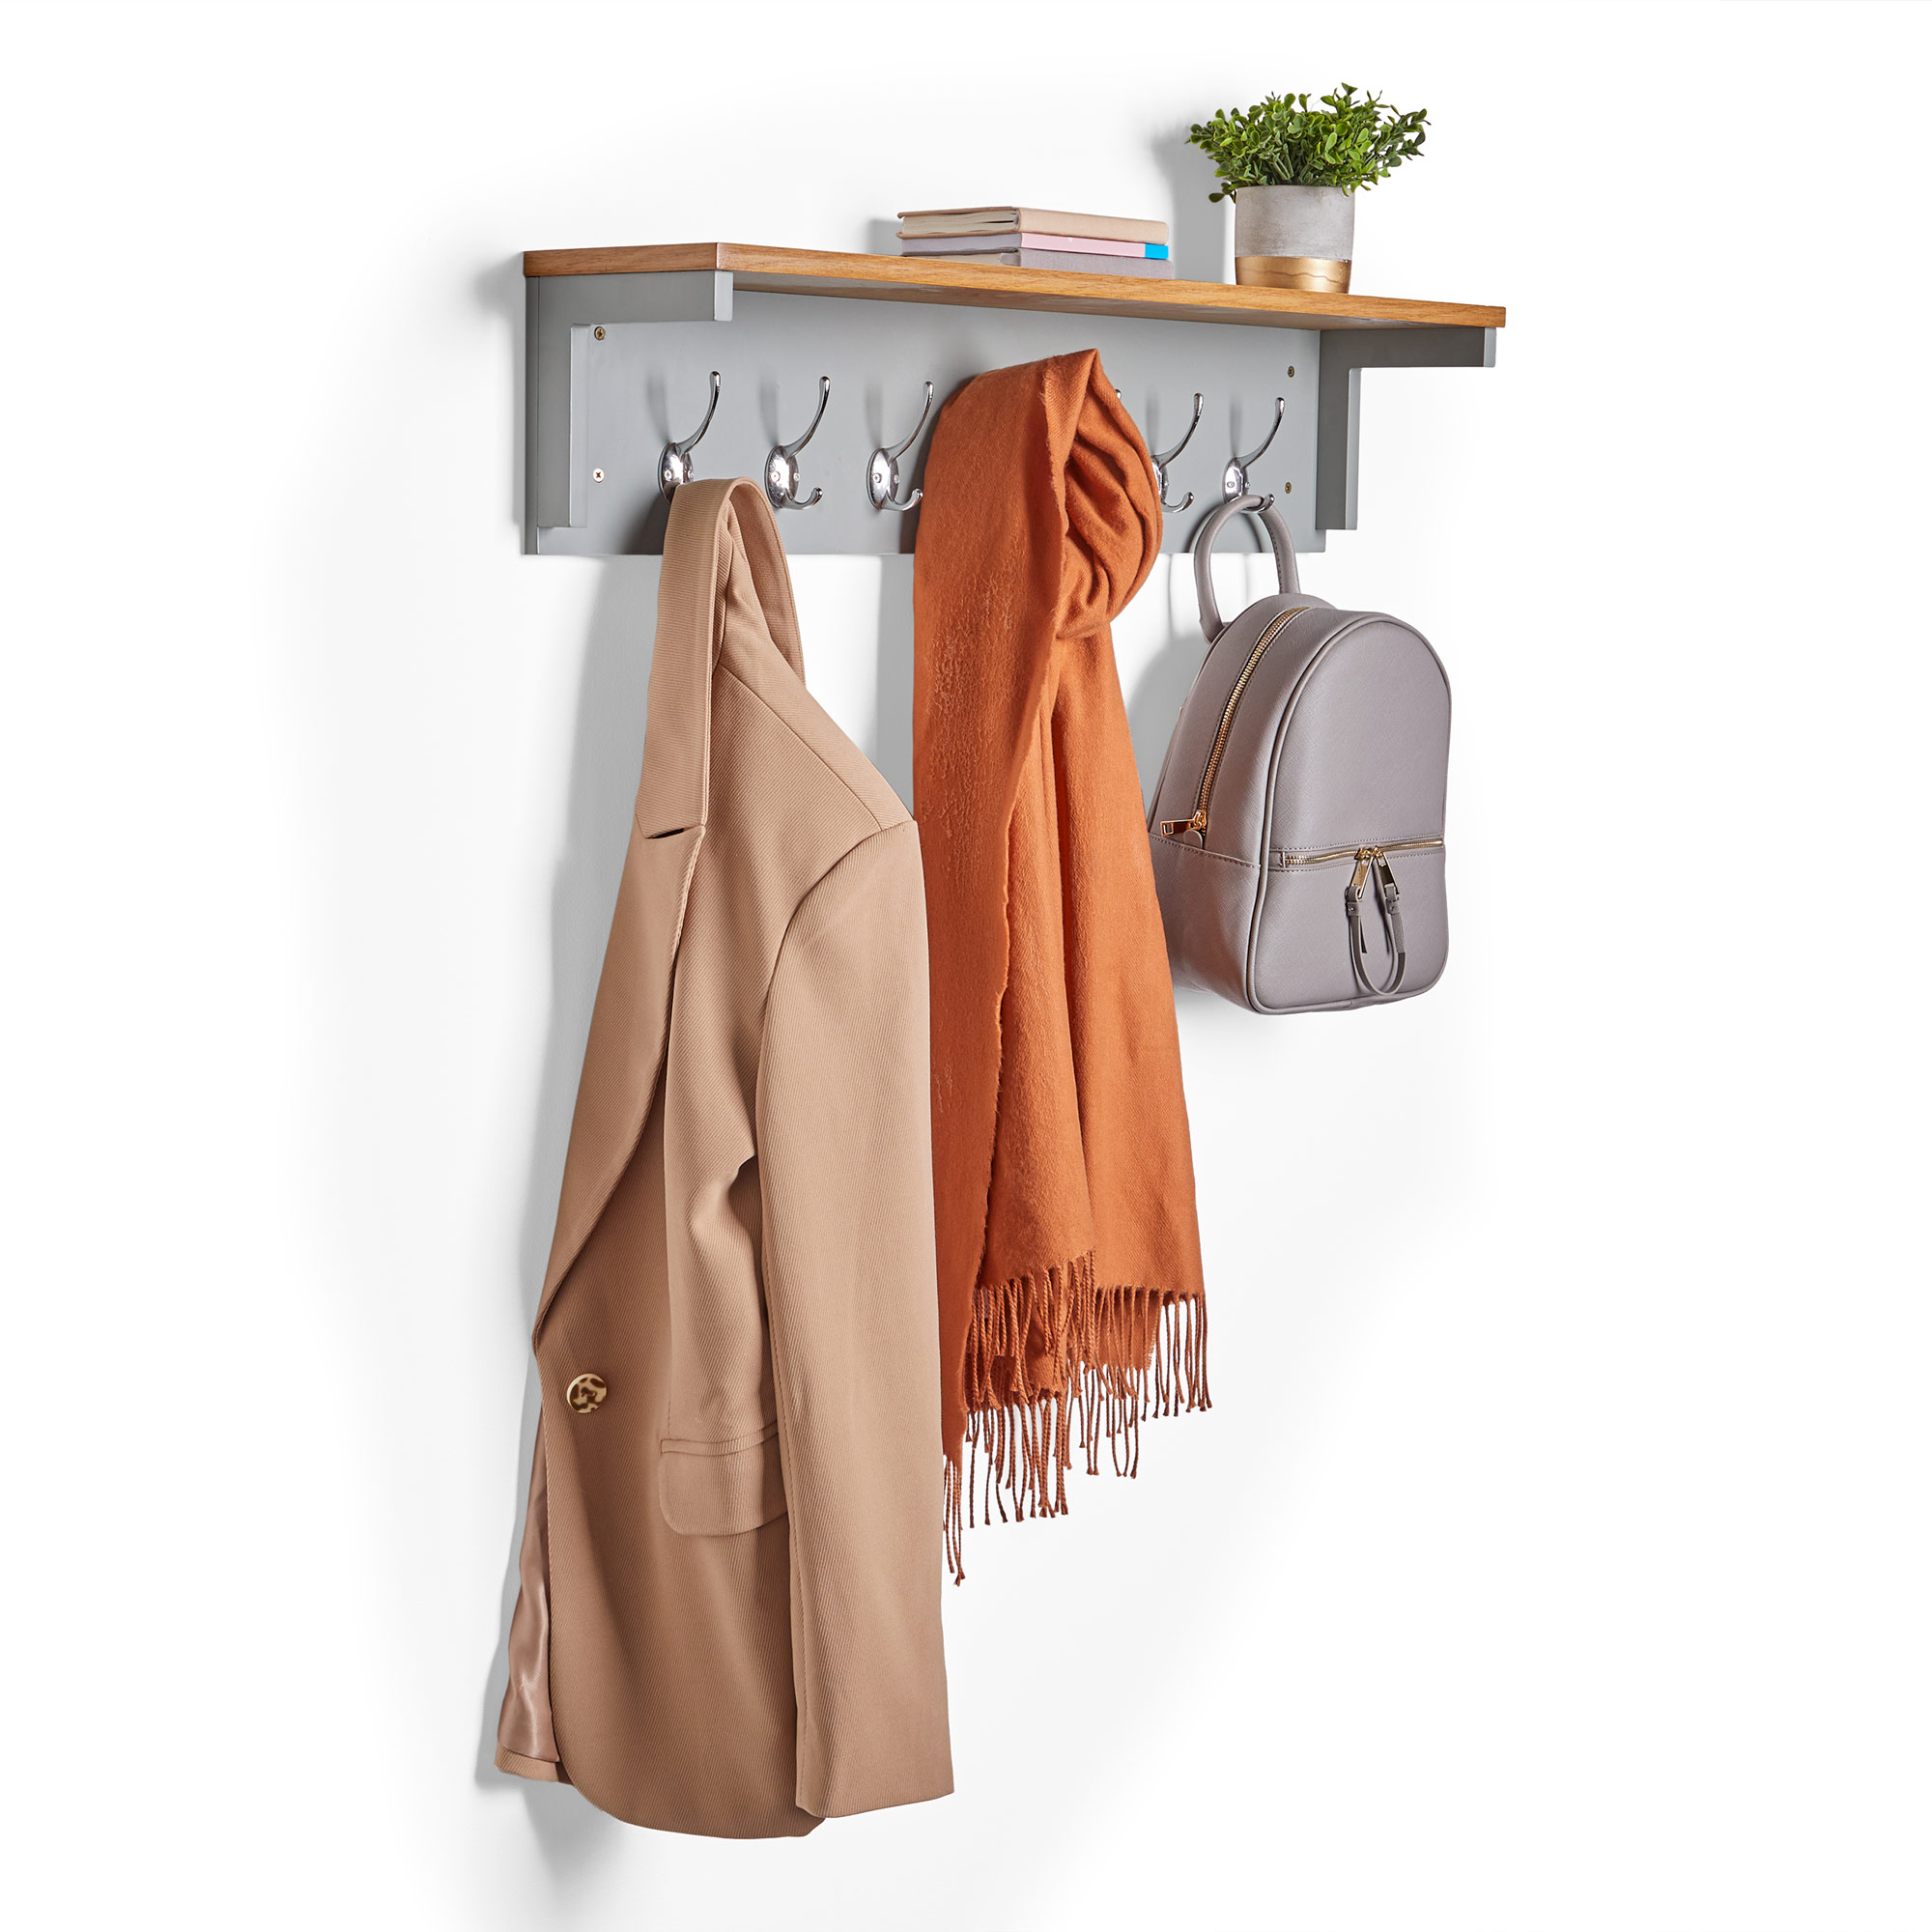 VonHaus Coat Hooks Wall Mounted with Shelf – Grey 7 Hook Coat Rack, 60kg capacity